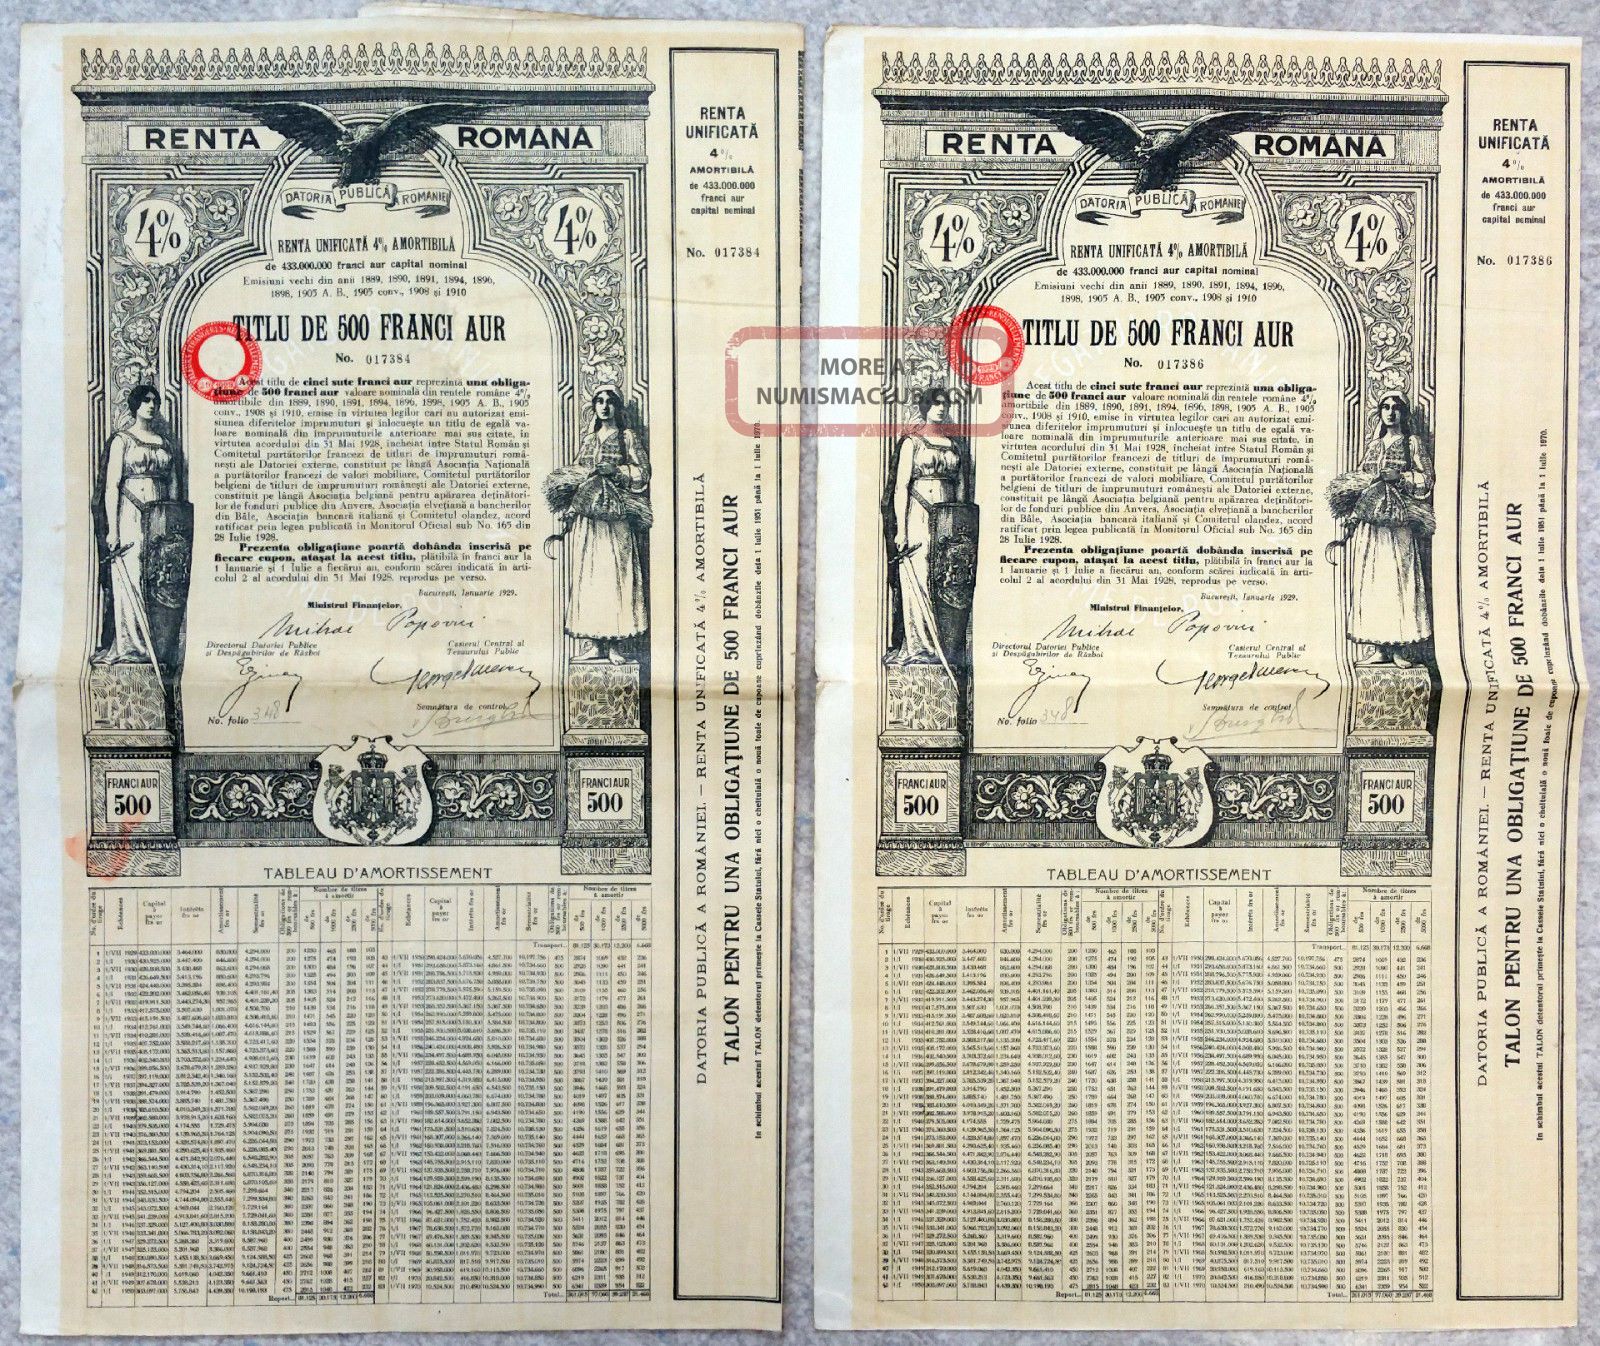 Romania 1929 - Renta Romana 4 - 2x Titlu De 500 Franci Aur Stocks & Bonds, Scripophily photo